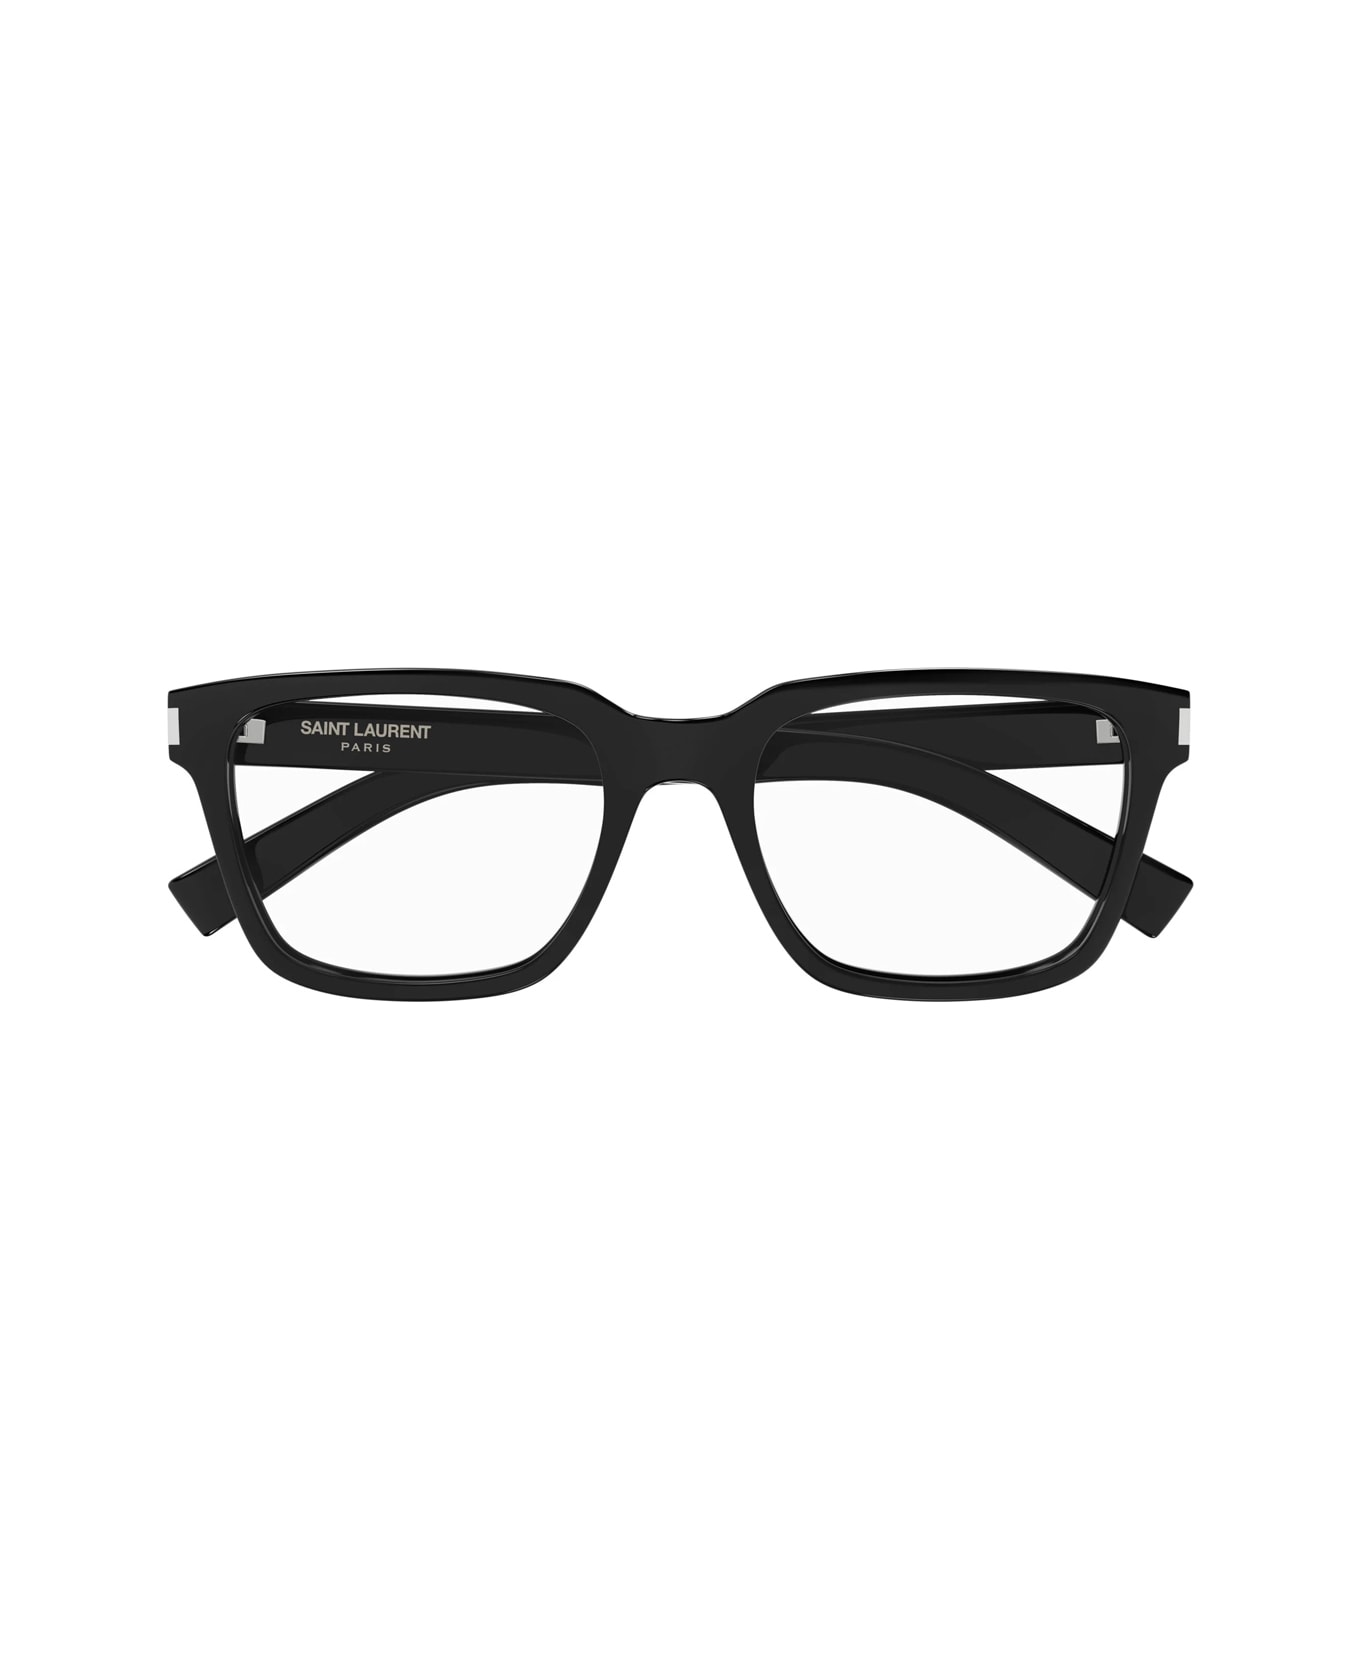 Saint Laurent Eyewear Sl 621 001 Glasses - Nero